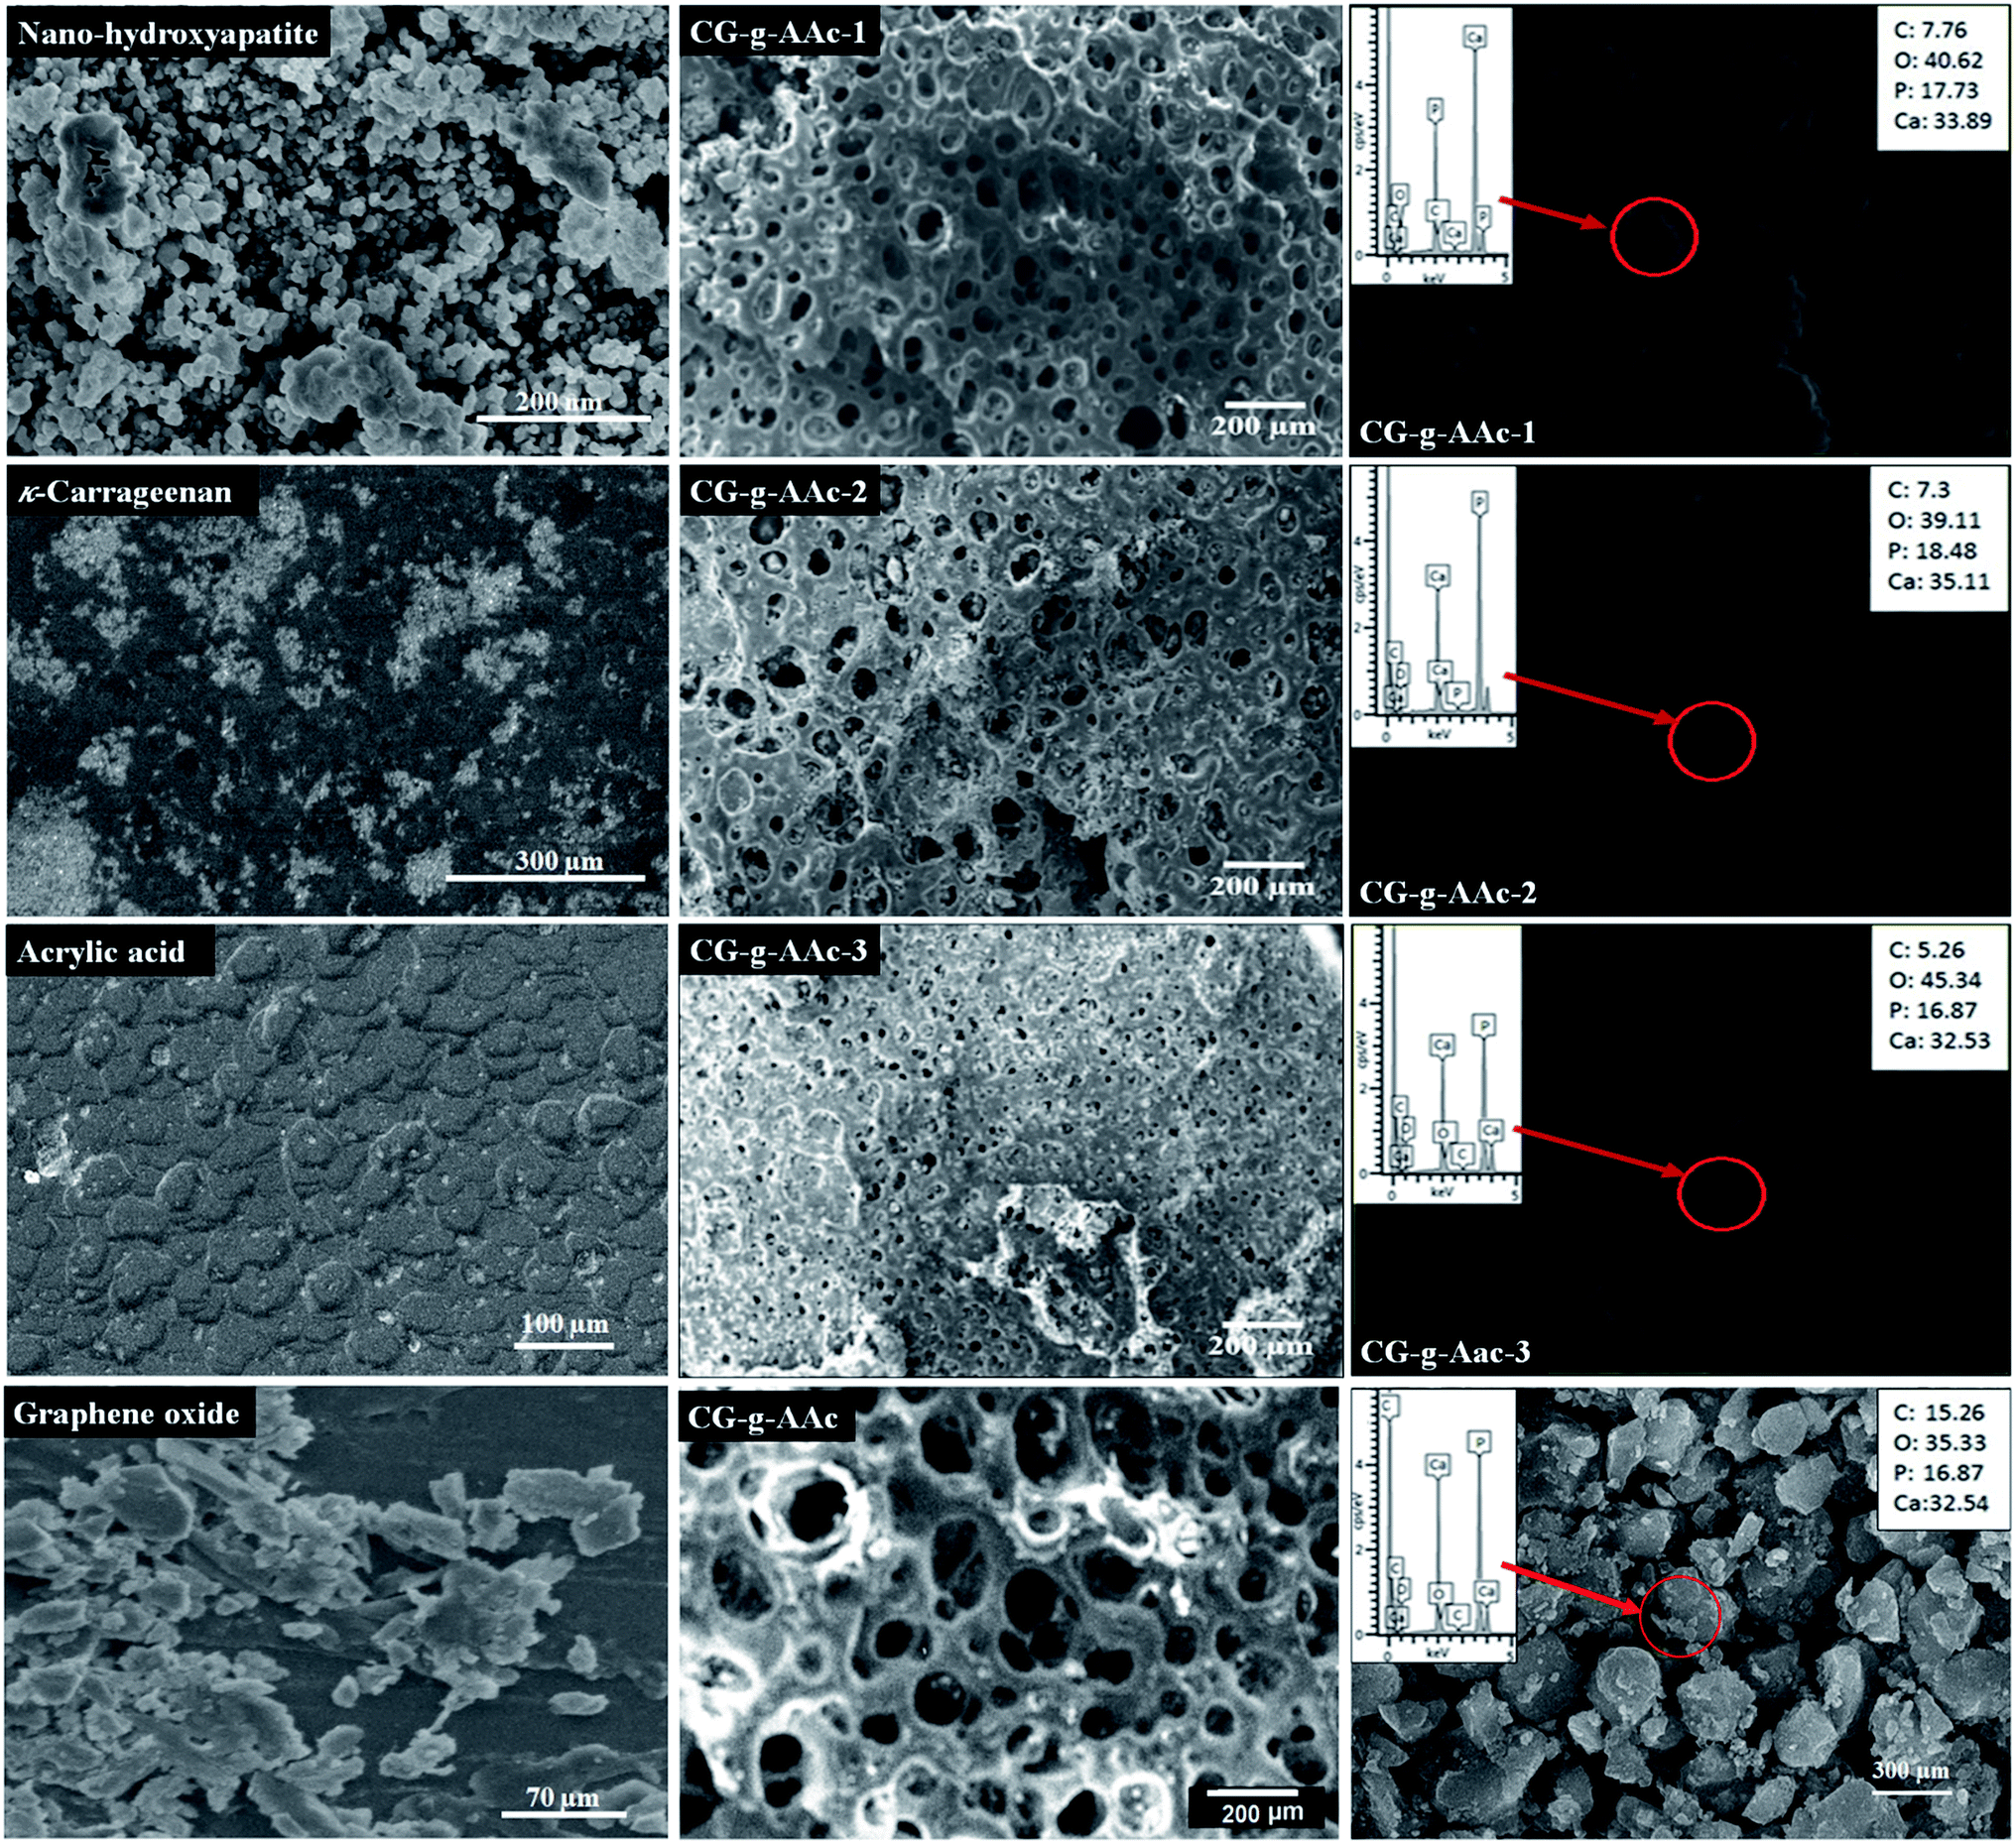 Development And In Vitro Evaluation Of K Carrageenan Based Polymeric Hybrid Nanocomposite Scaffolds For Bone Tissue Engineering Rsc Advances Rsc Publishing Doi 10 1039 D0rab